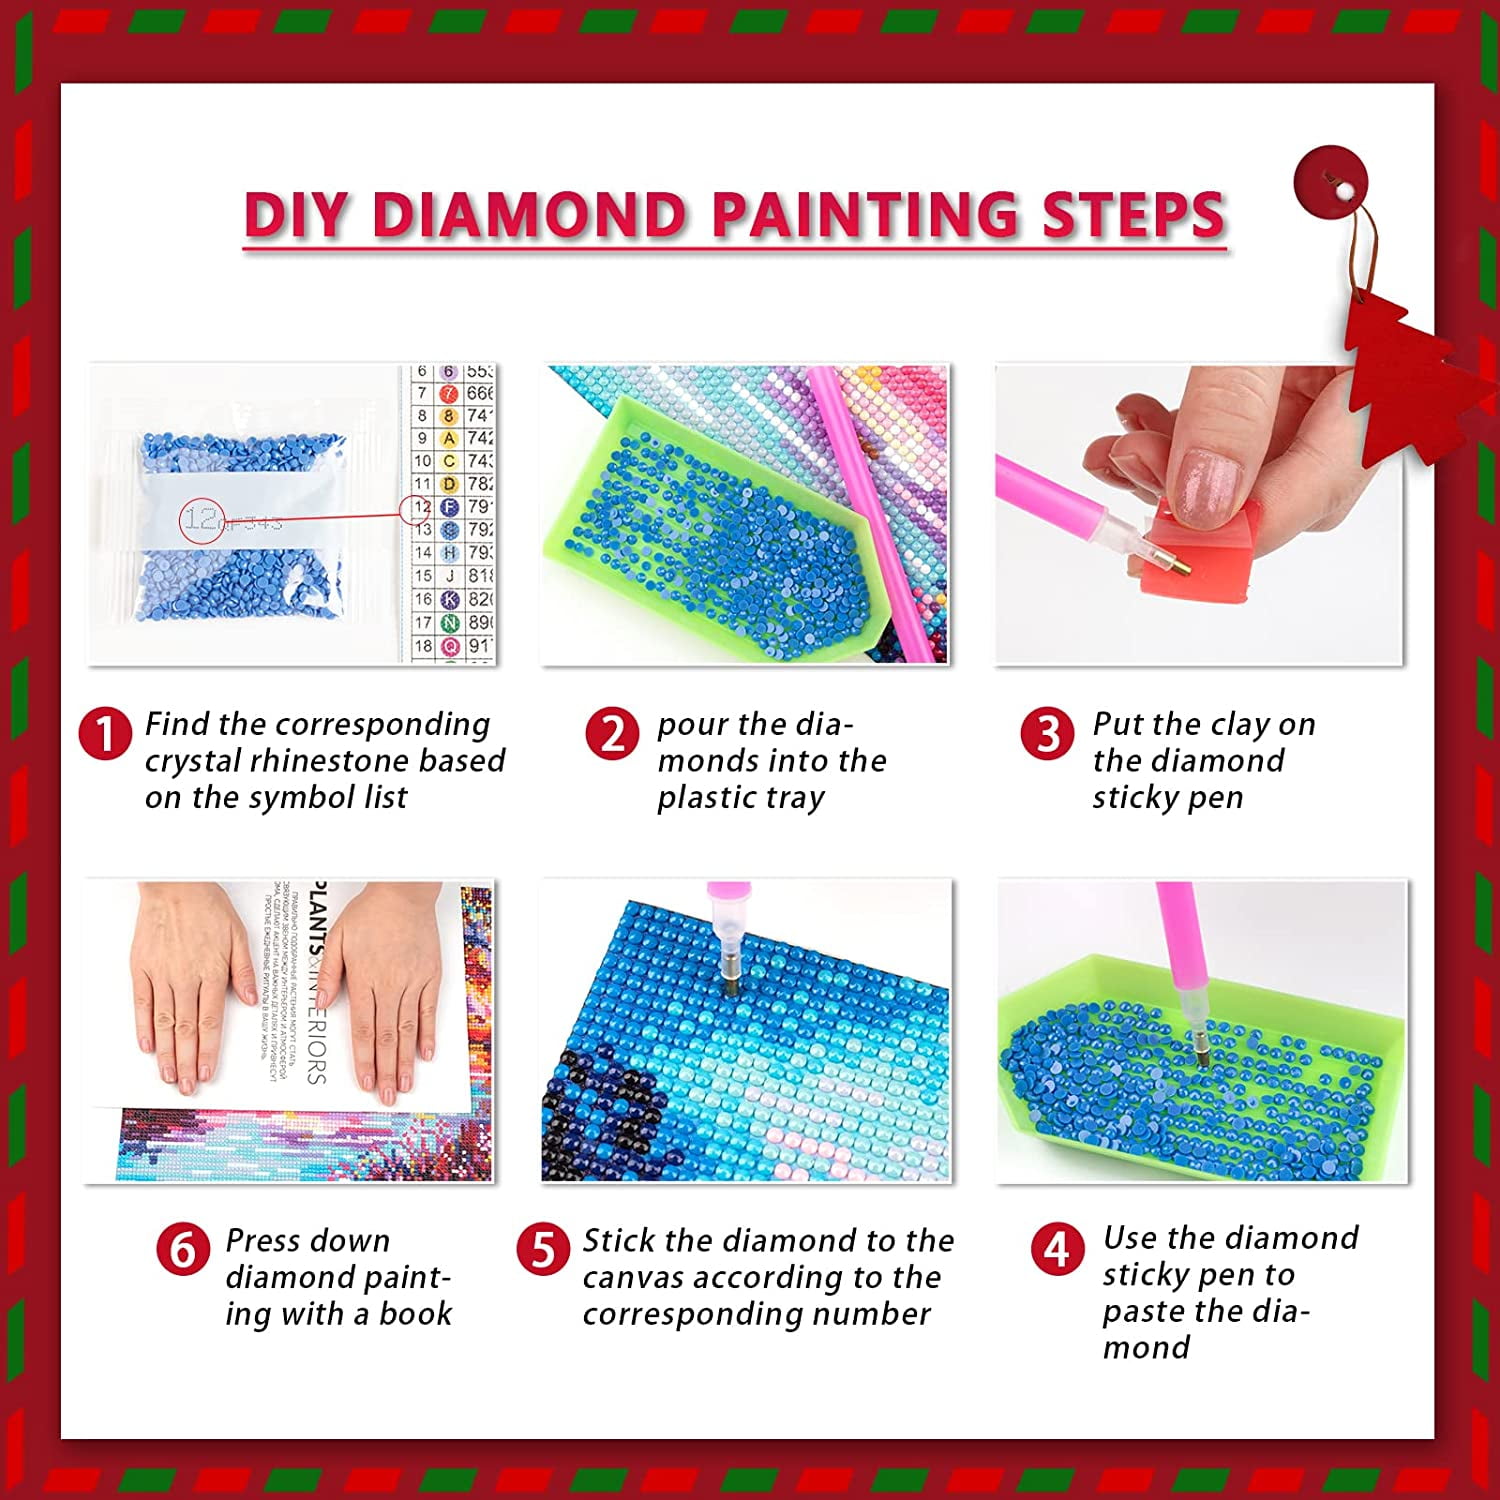 Valentine's Day Diamond Painting Kits,5D Heart Diamond Art Kits for Adults  Kids Beginner,DIY Diamond Art Kits Full Round Drill Diamond Dots  12X16inch(NO.984) 